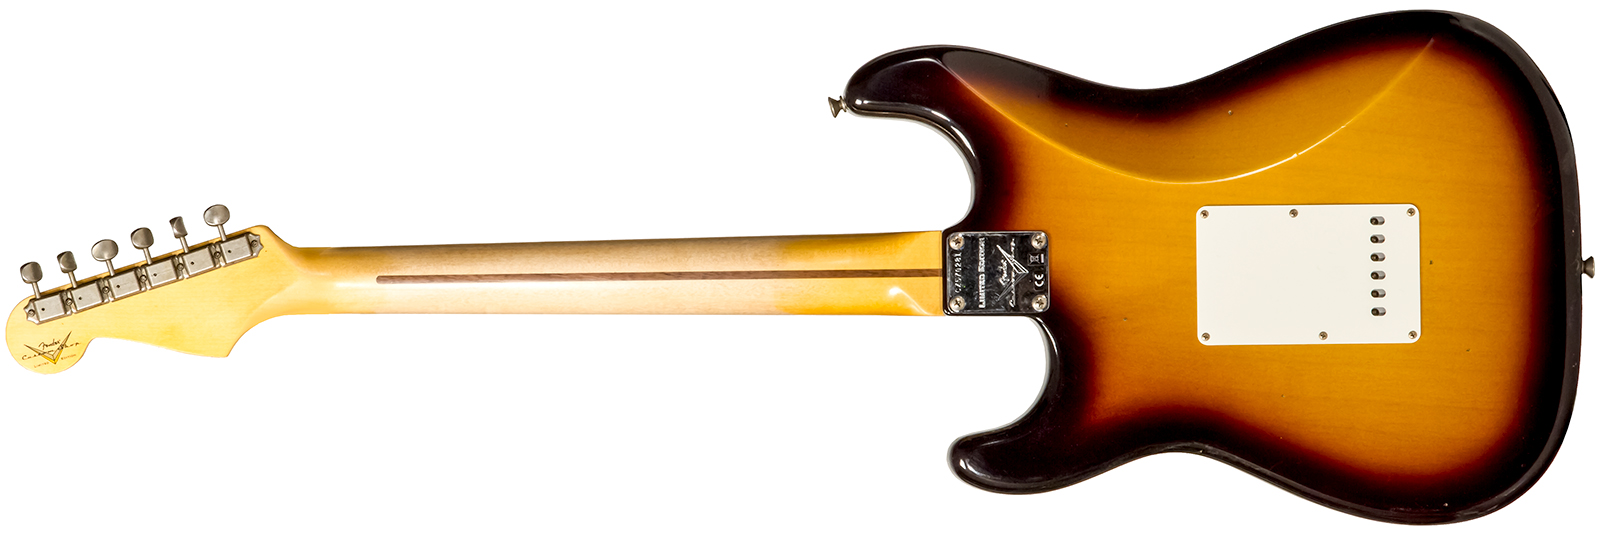 Fender Custom Shop Strat 1956 3s Trem Mn #cz570281 - Journeyman Relic Aged 2-color Sunburst - Guitarra eléctrica con forma de str. - Variation 1